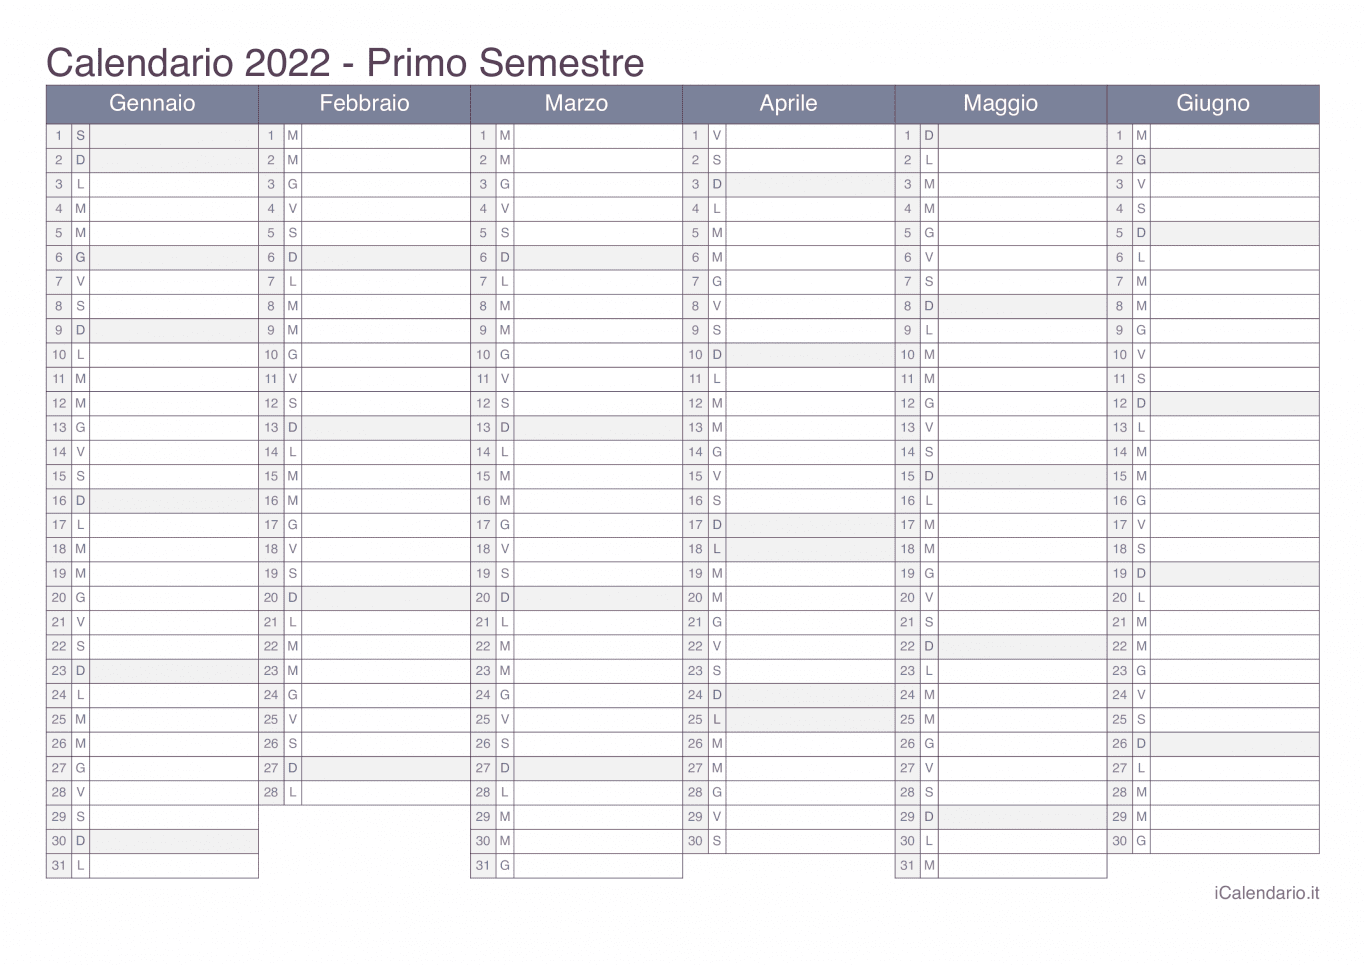 Calendario semestrale 2022 - Office